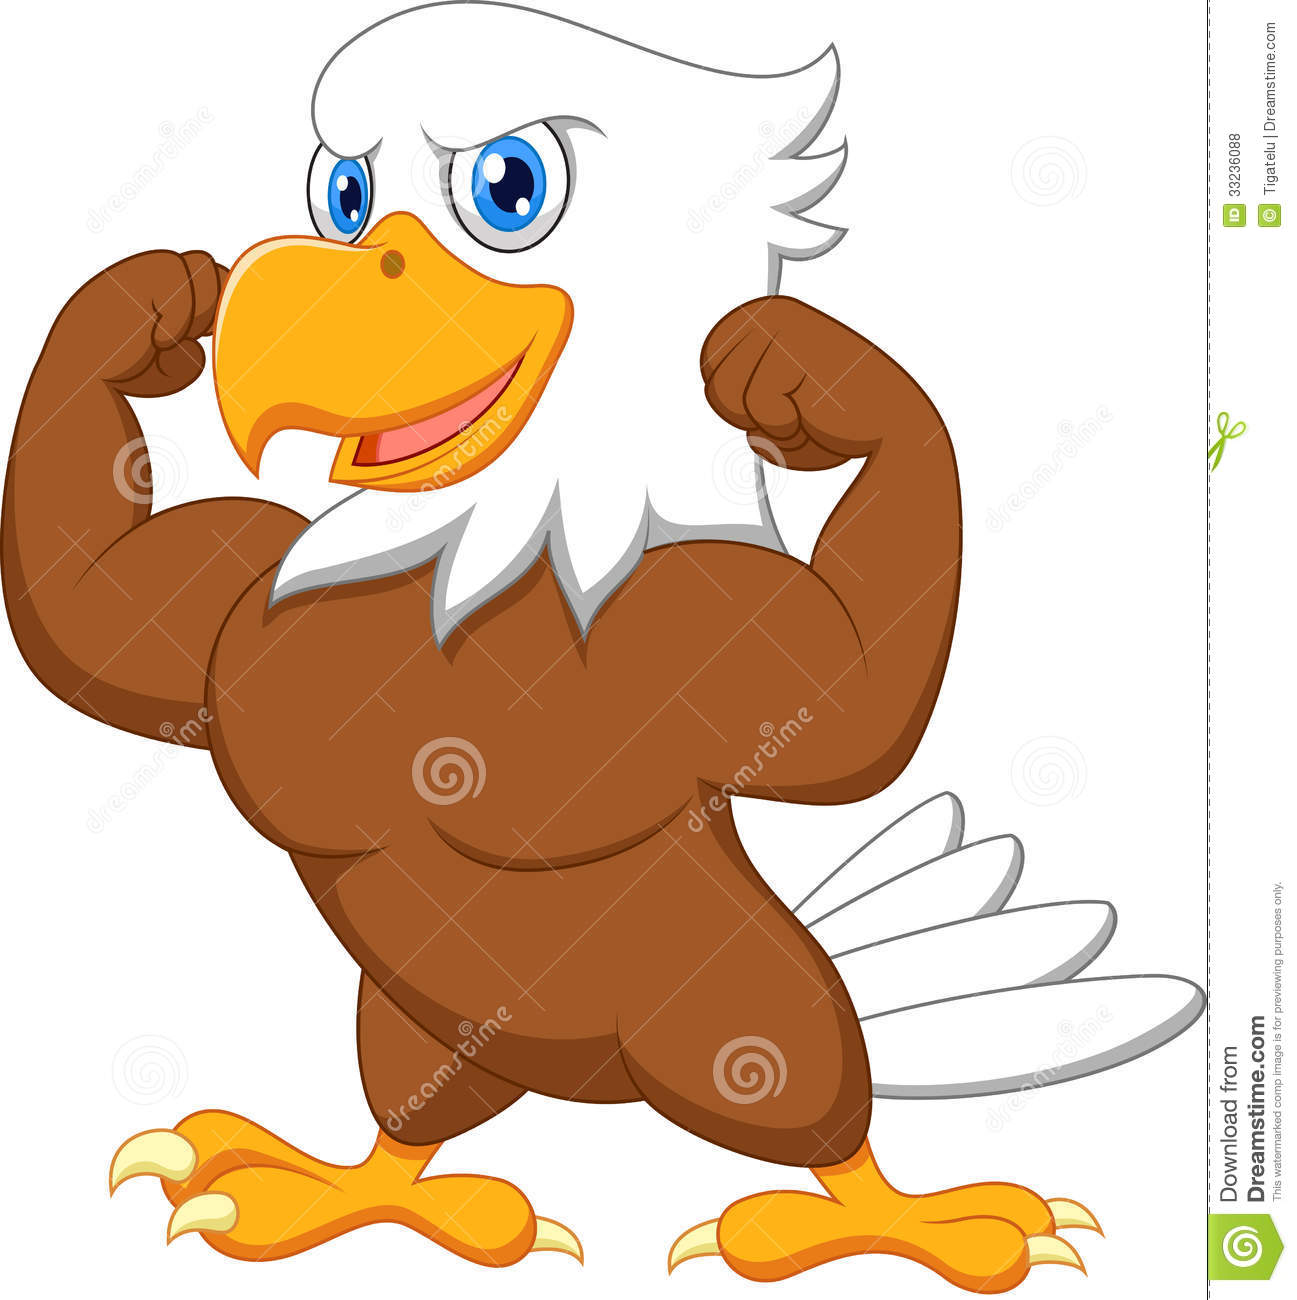 Strong Eagle Cartoon Royalty Free Stock Photos   Image  33236088